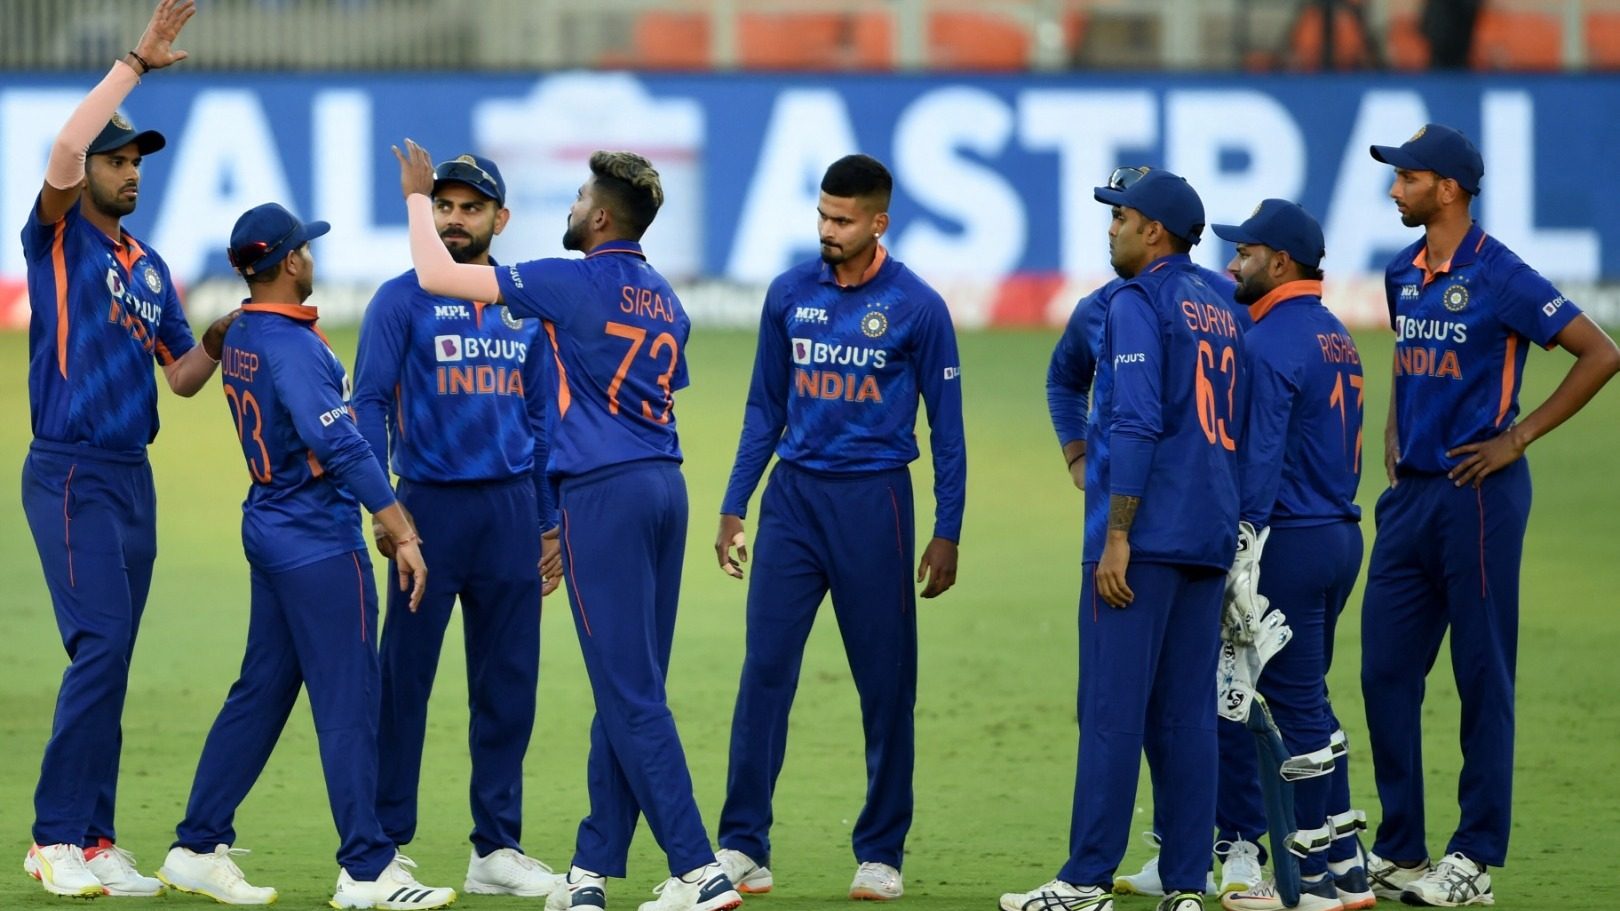 cricket in india essay